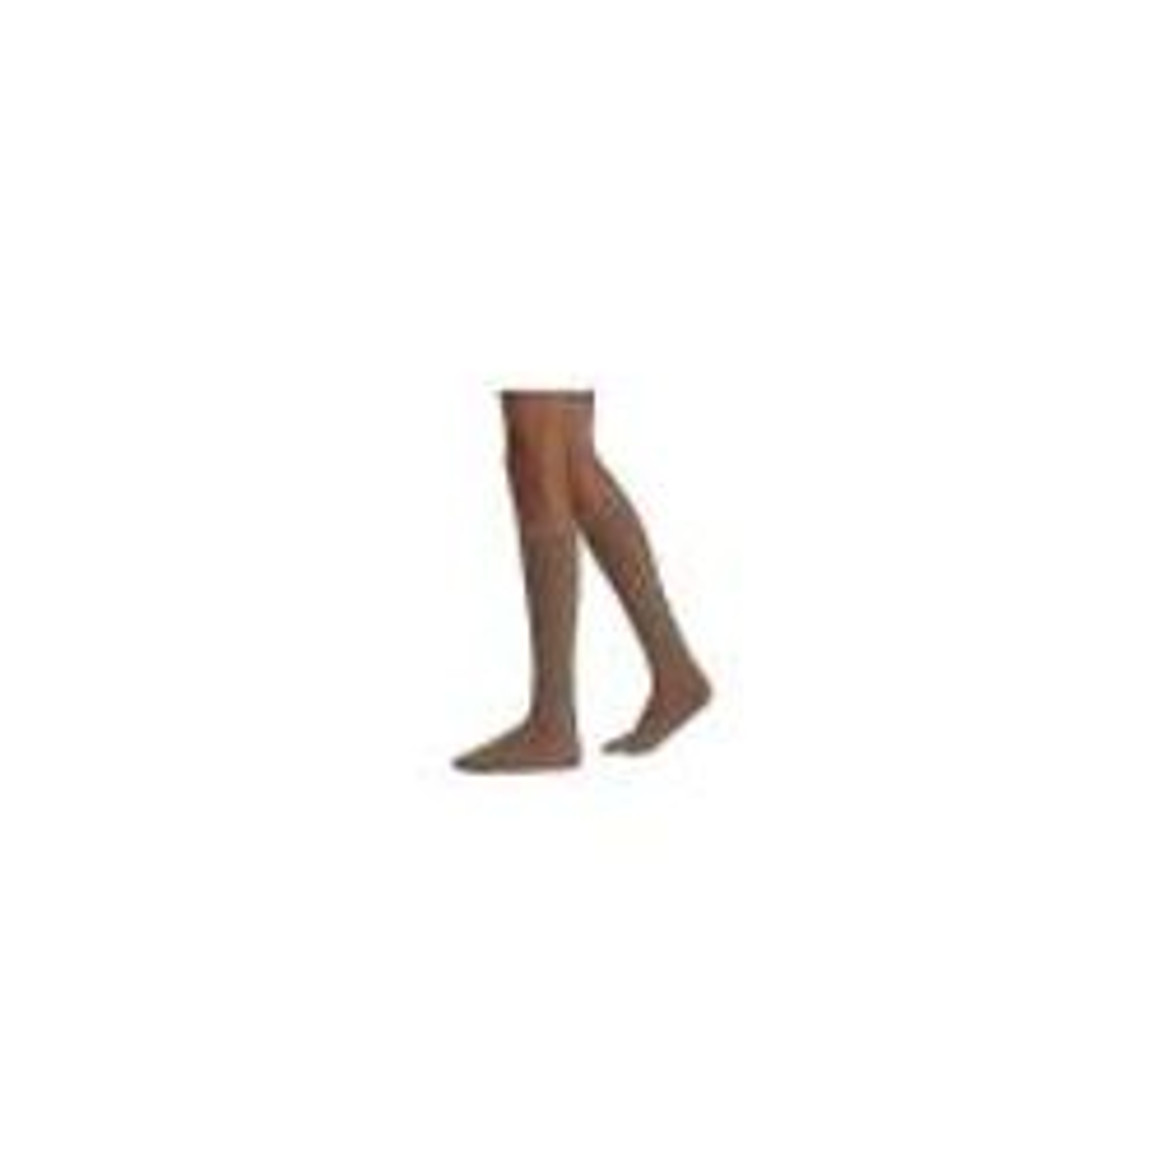 Juzo Unisex Varin Knee High Compression Stockings, Size 5 Regular, Black, Pair